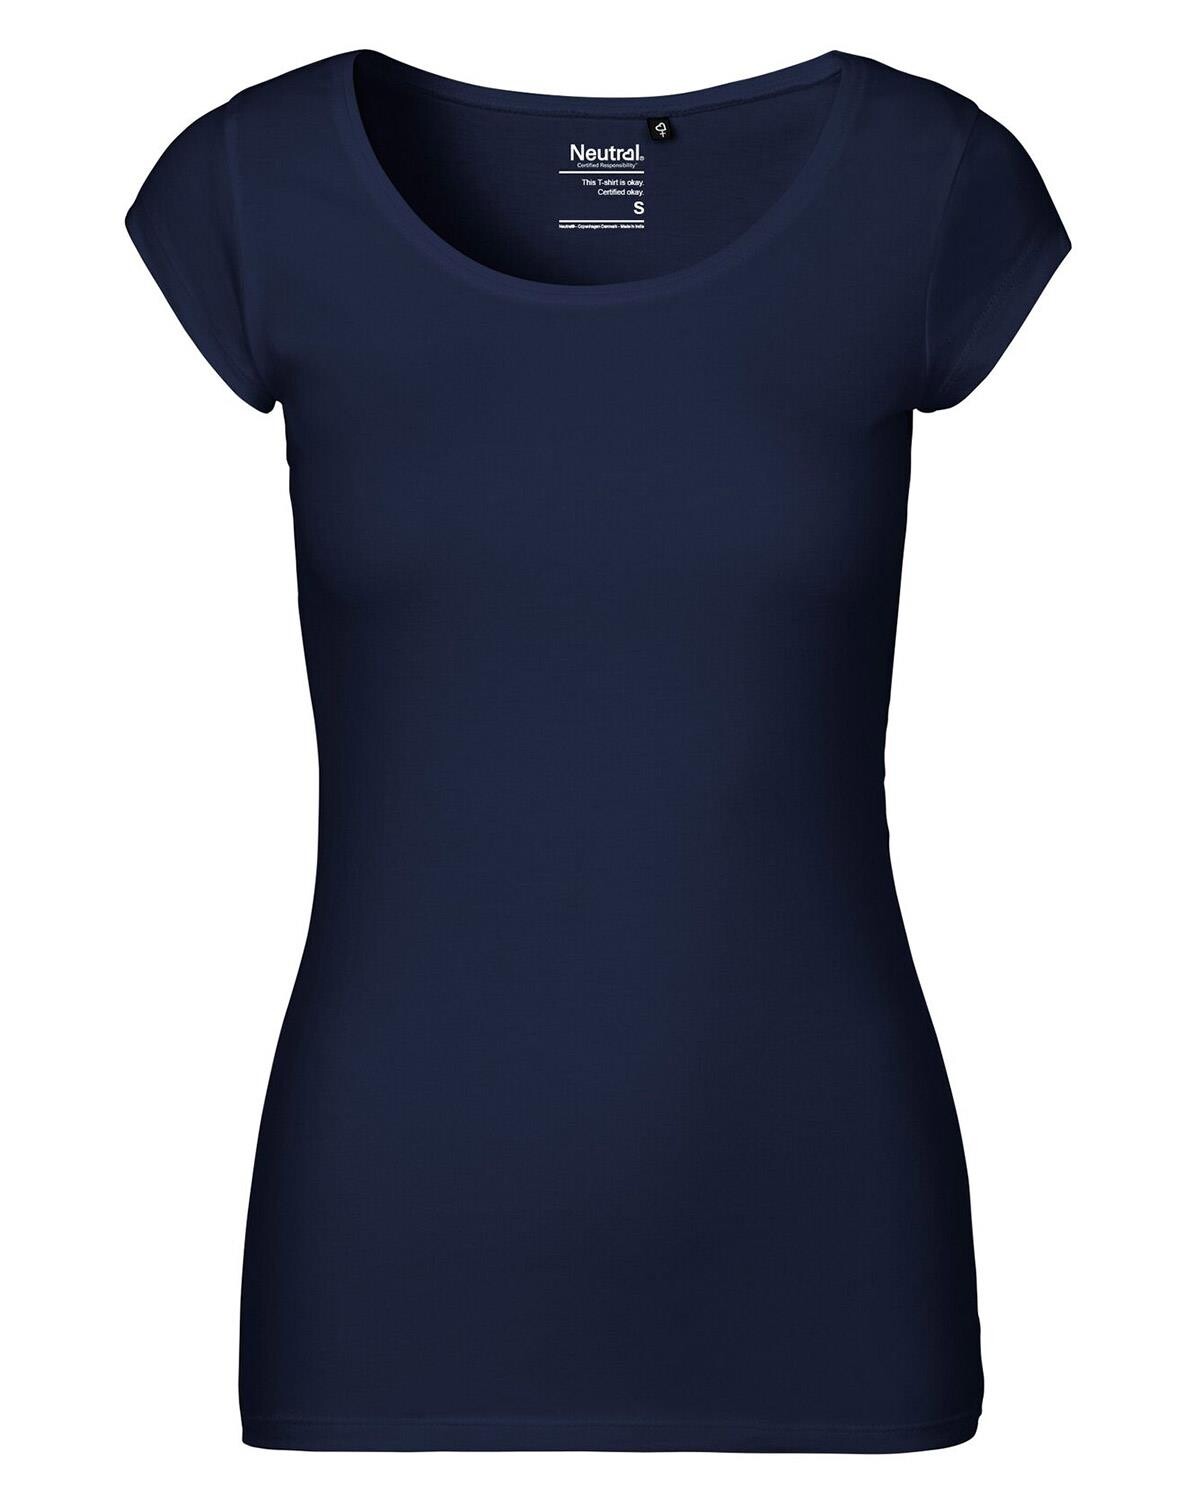 Neutral Organic - Ladies Round neck Short Sleeve Tee (Navy, L)